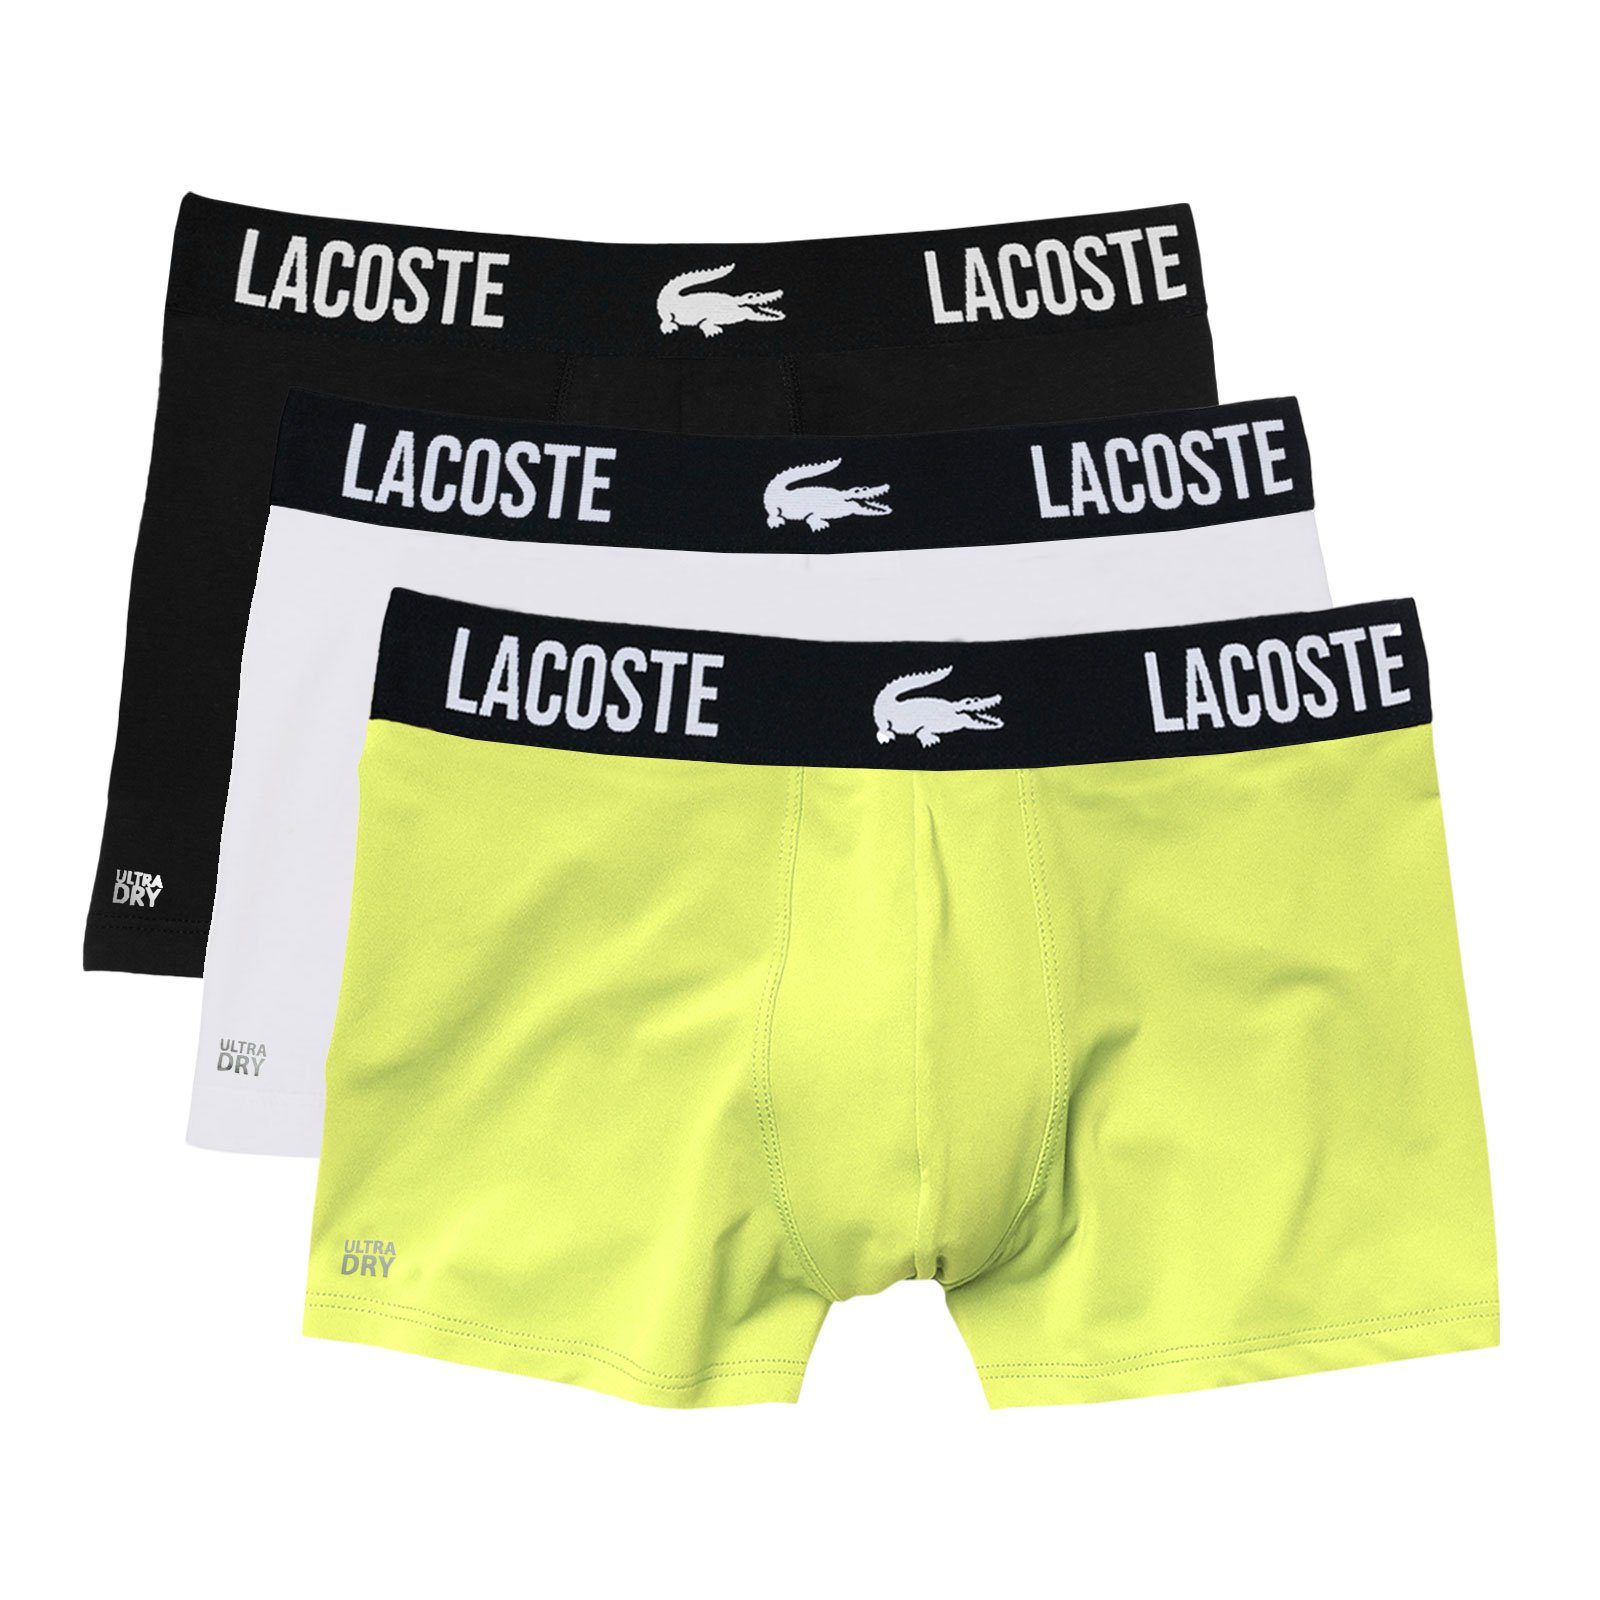 Lacoste Trunk 3er Pack Trunks (3-St., 3er Pack) mit LACOSTE-Schriftzug am Bund JIH black / white / lime